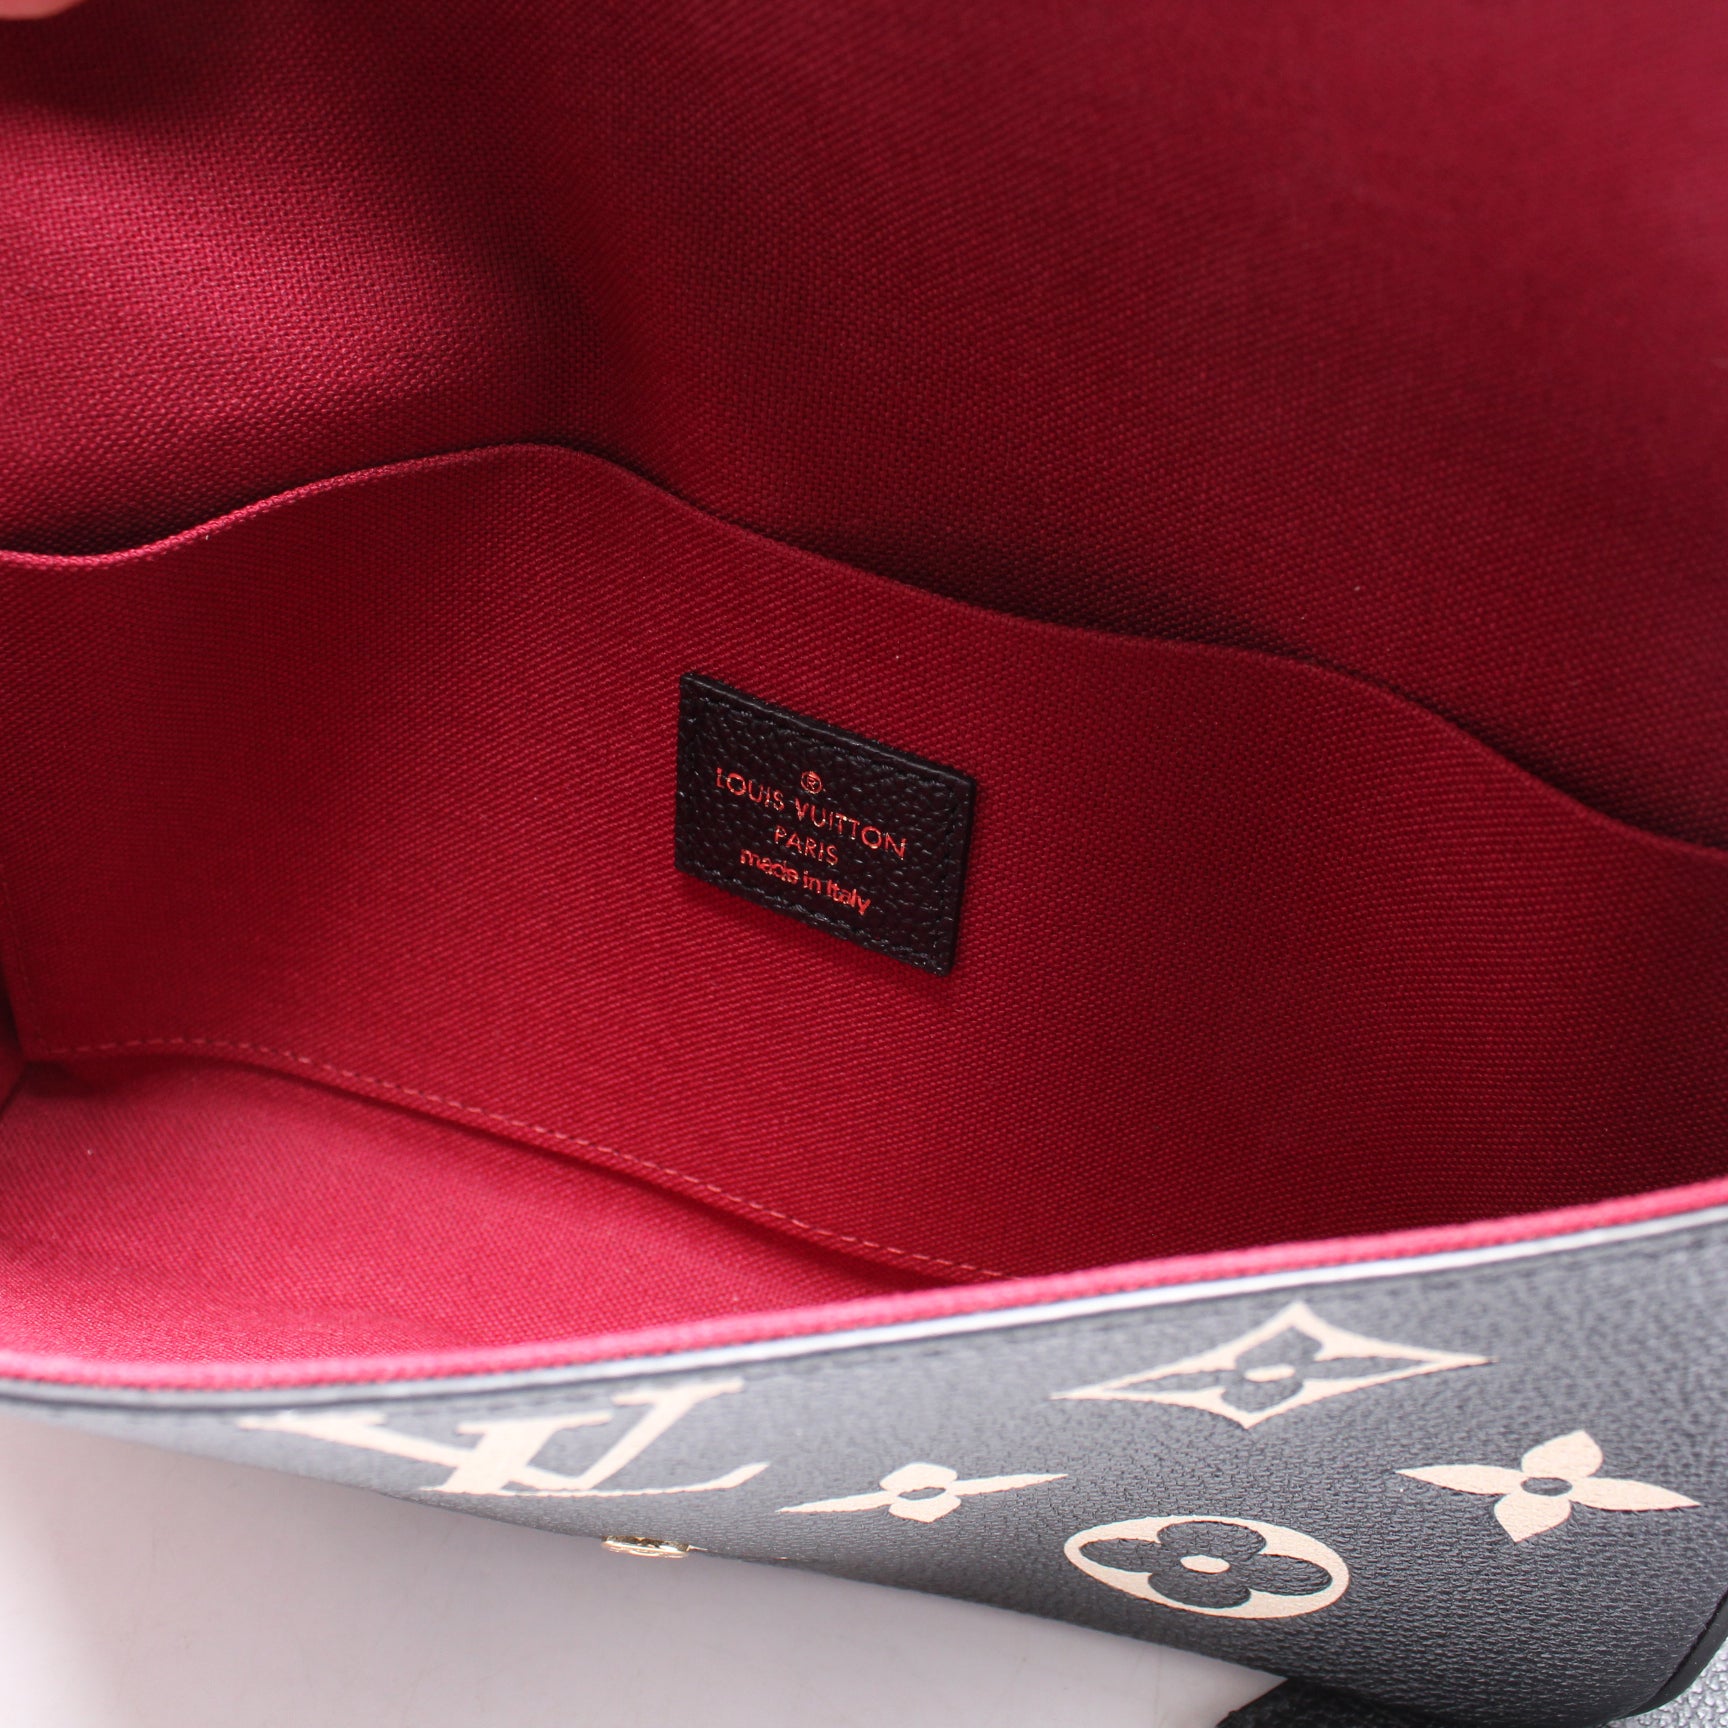  Louis Vuitton M80482 Pochette Felicey Bi-color Monogram  Empreinte Leather Cross Body Pouch Pochette Bag Black Gold Ladies Genuine  Cosmetic Box with Shop Bag, Black : Clothing, Shoes & Jewelry